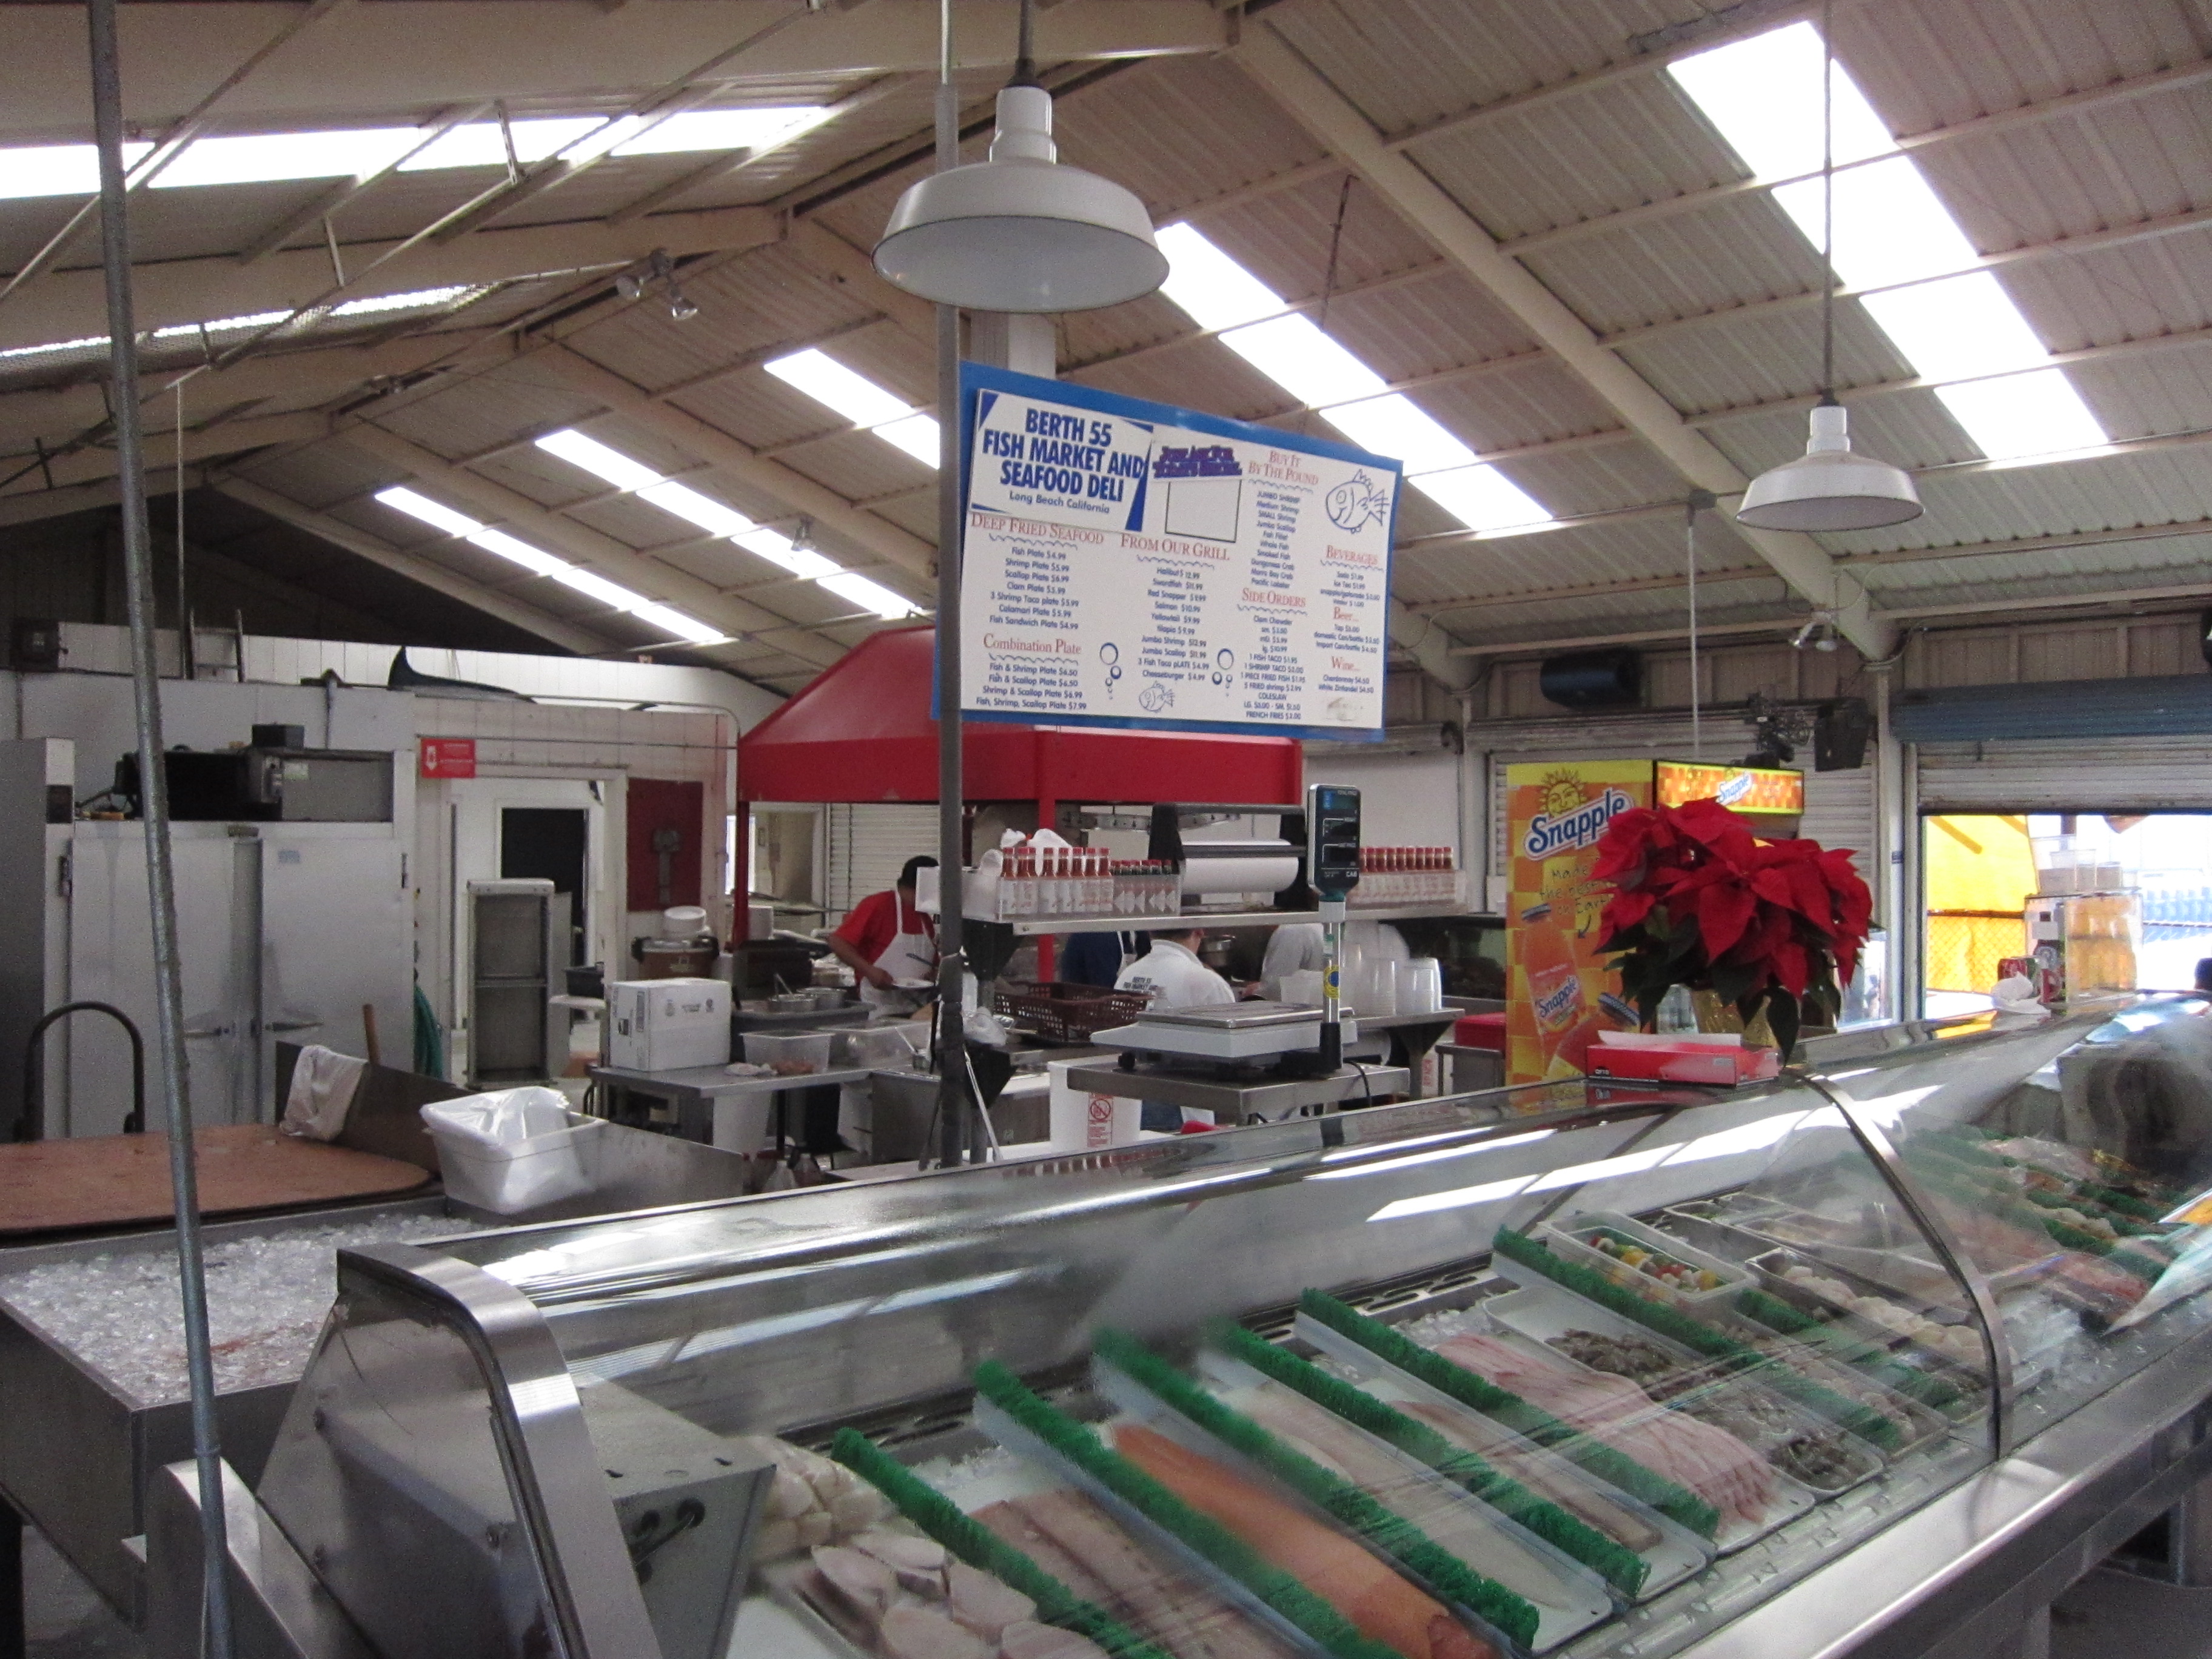 Berth 55 Fish Market – Inside